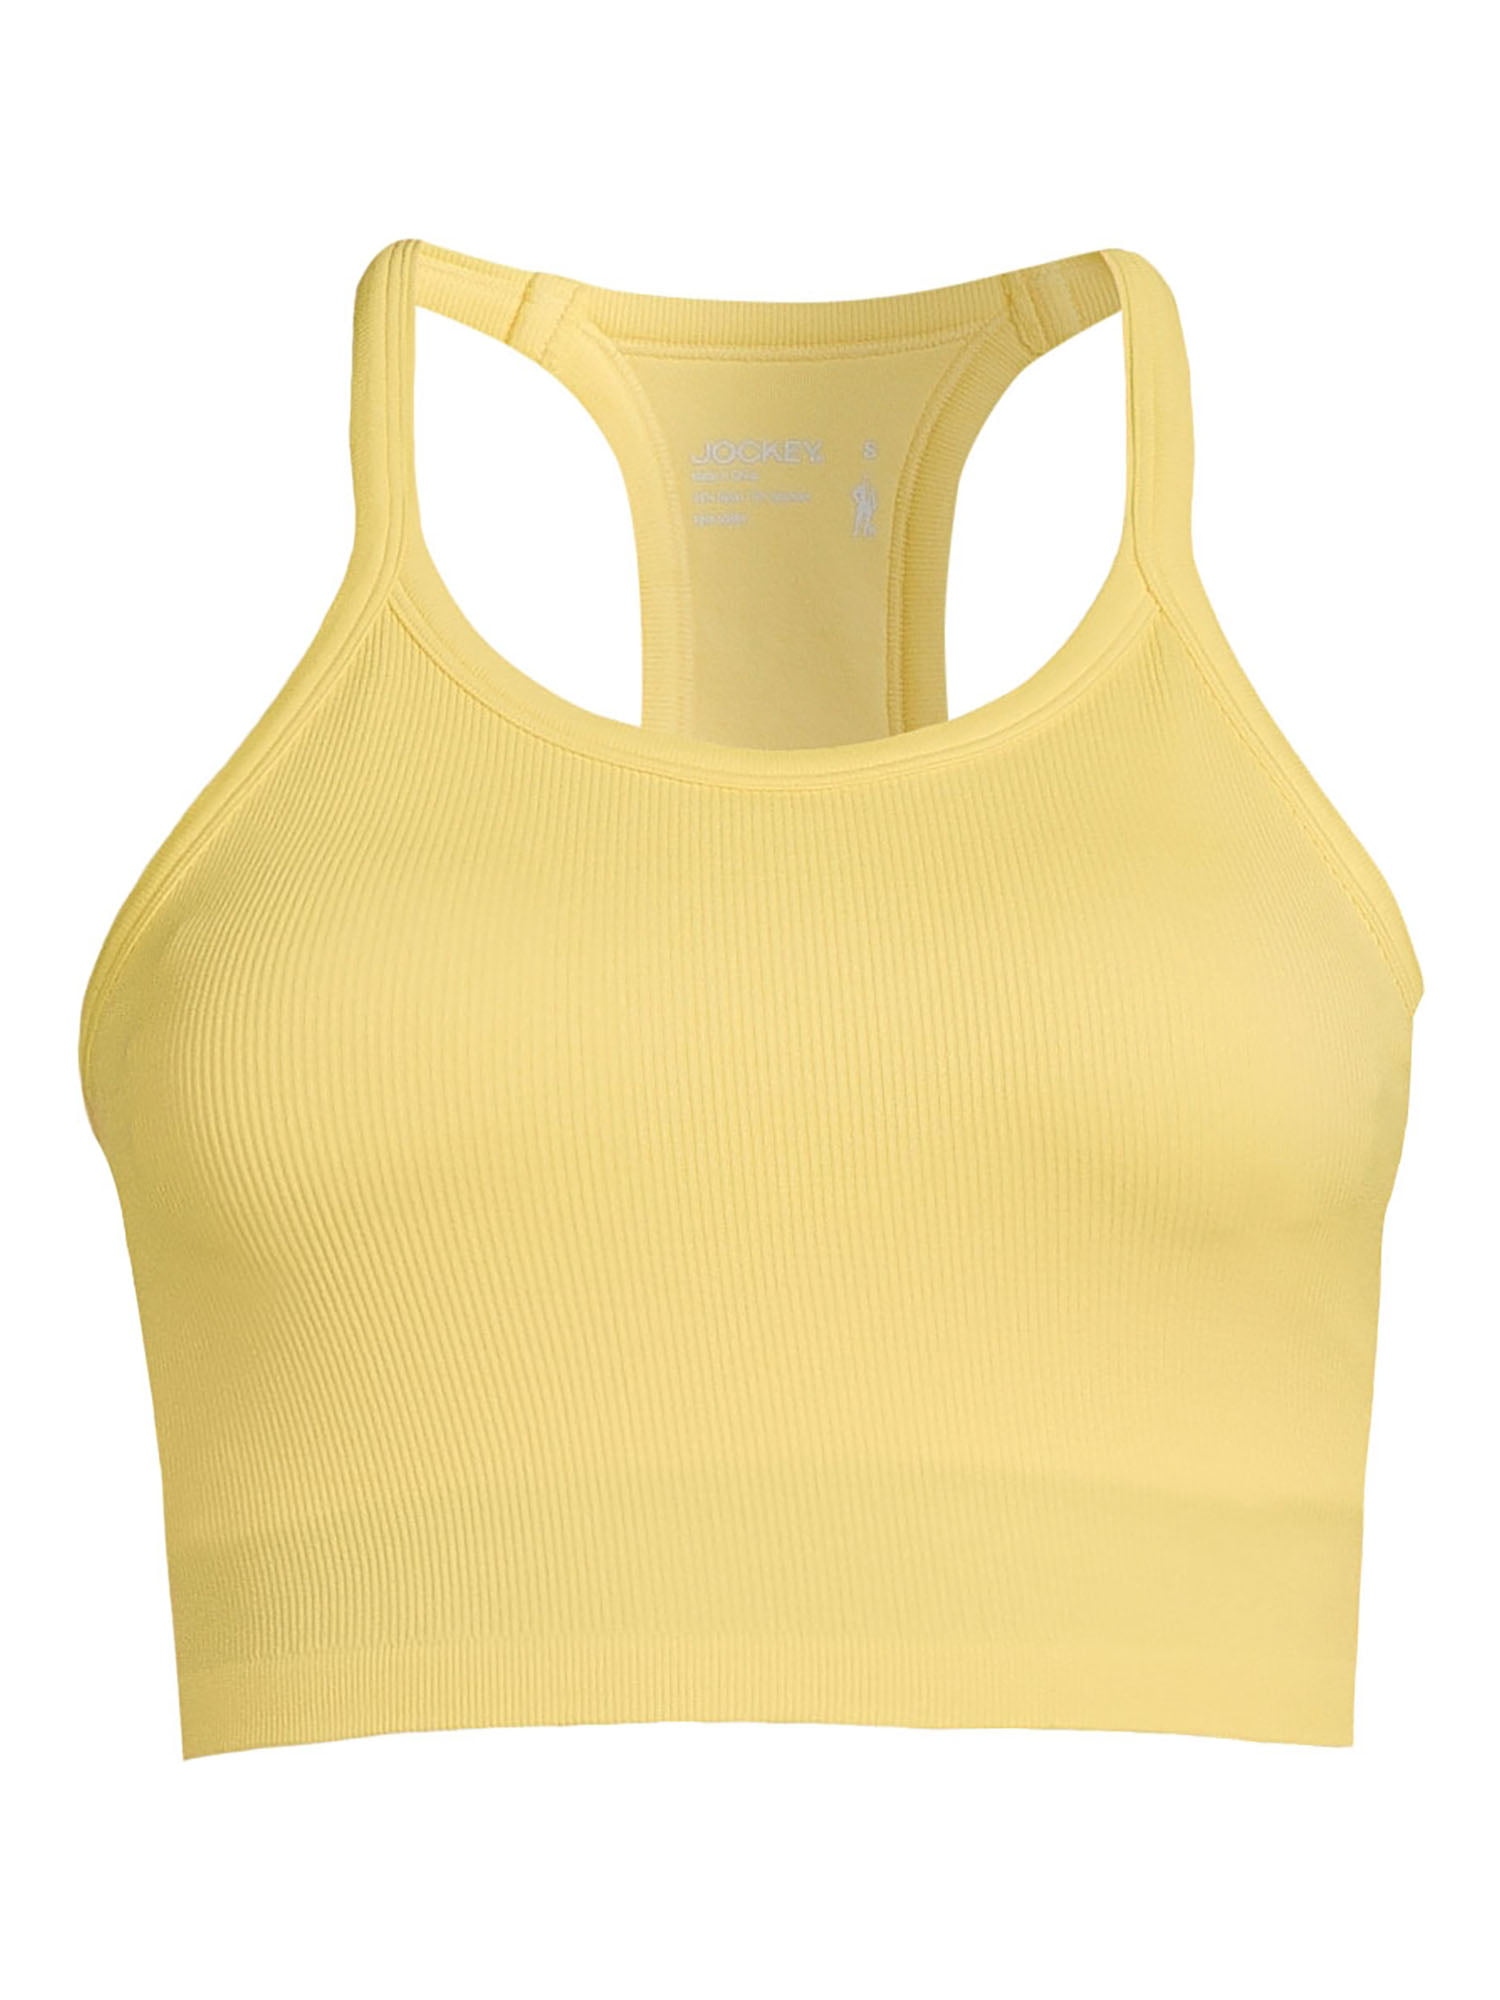 Jockey Women's Activewear Melange Pop Push Up Sports Bra Grey Yellow Medium  NWOT